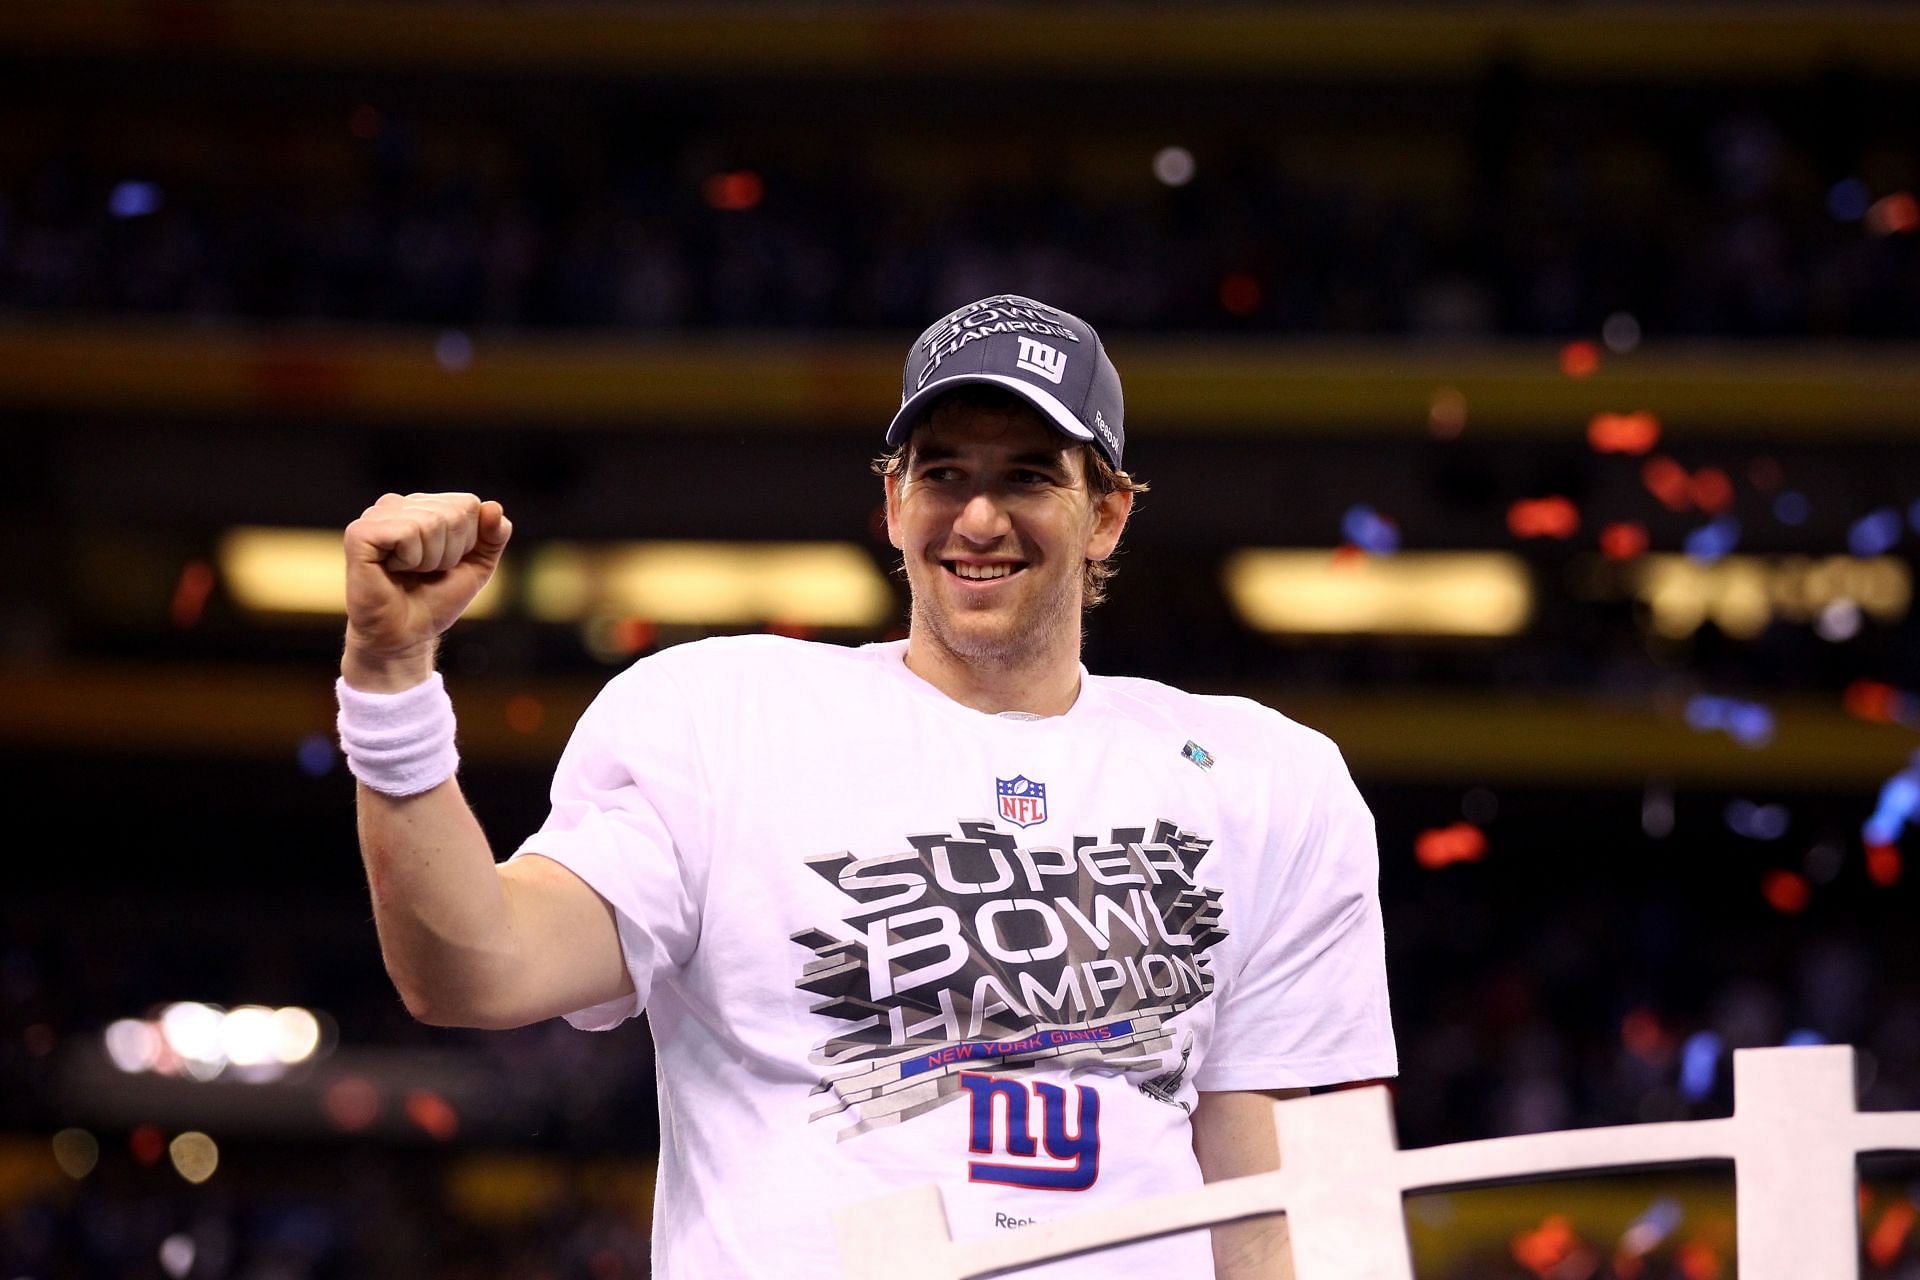 Super Bowl XLVI - Eli Manning celebrates